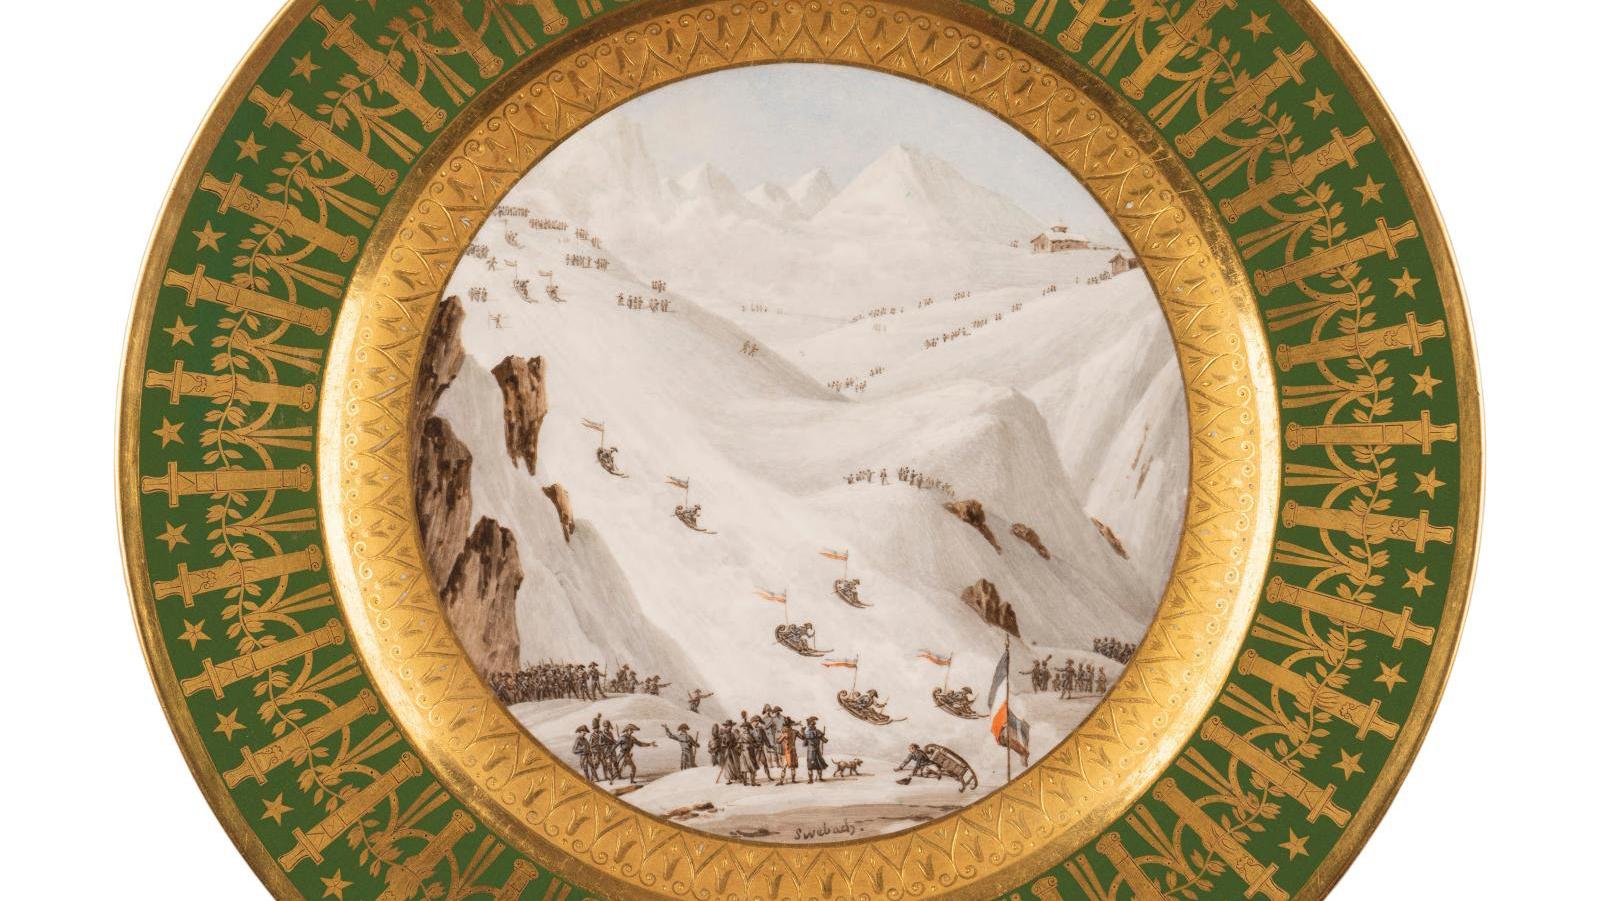 1807–1810. Porcelain dish from a 72-piece service called "Quartiers généraux", commissioned... Precious Memories of Napoleon I